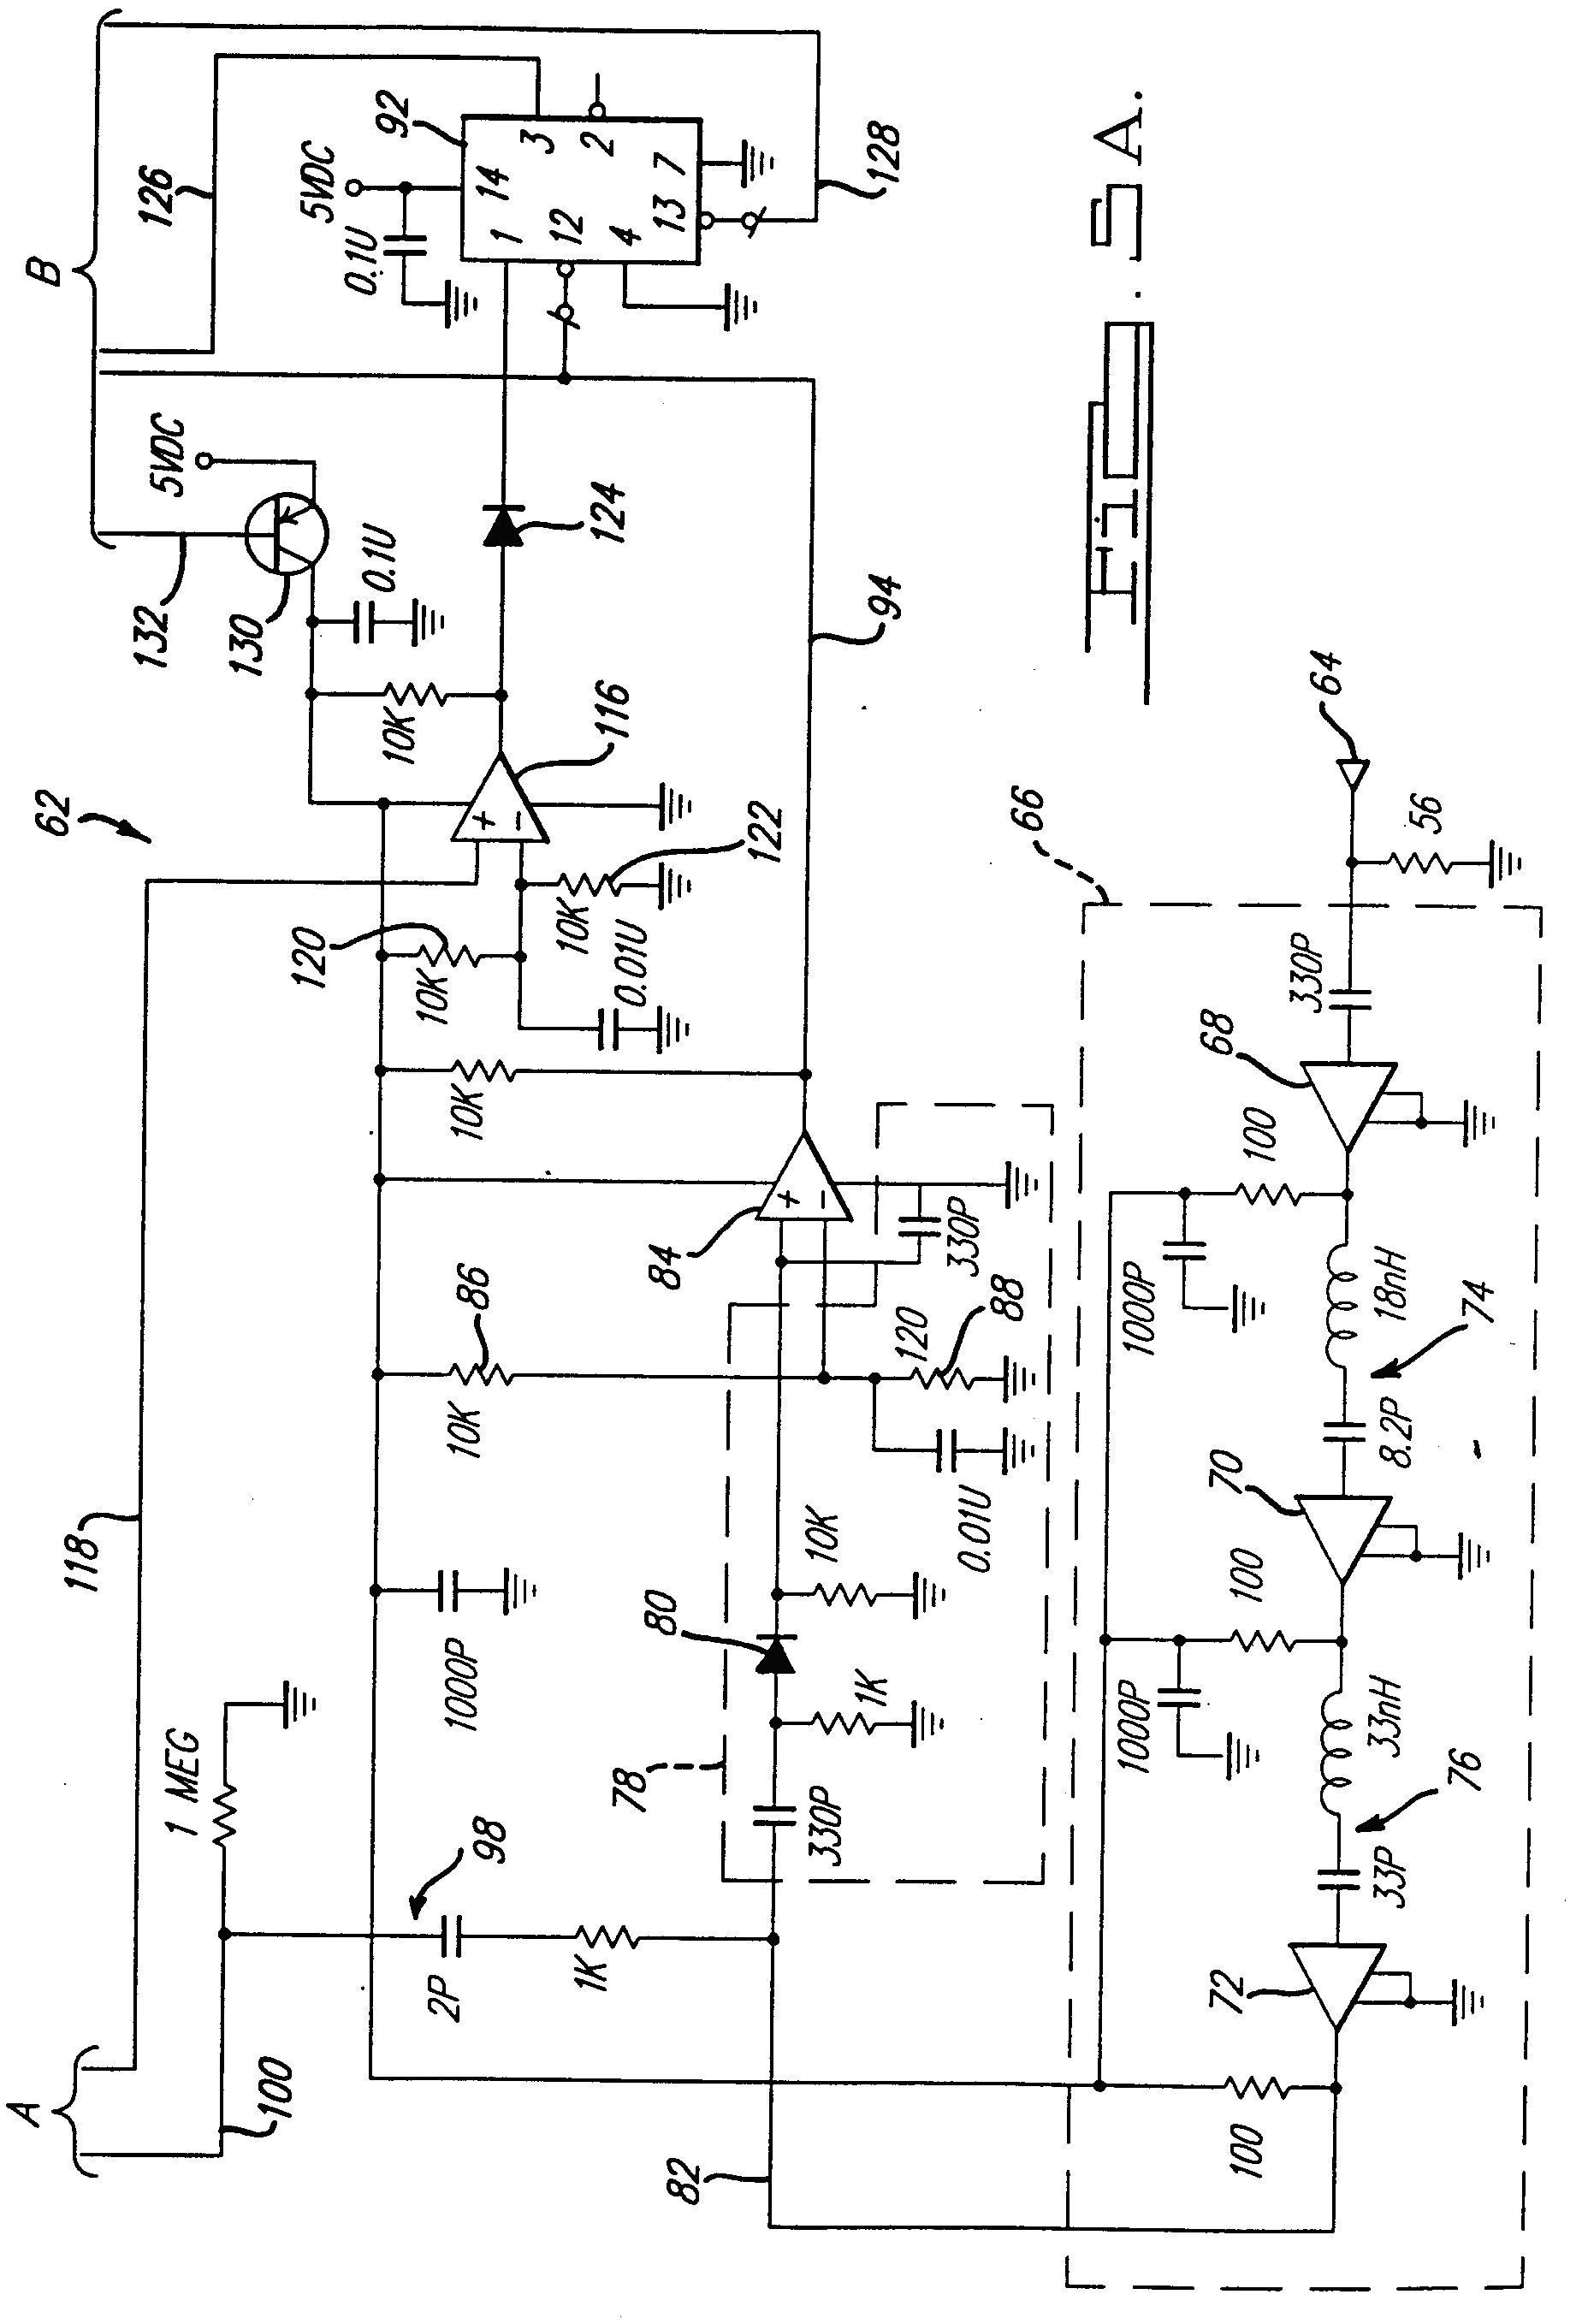 pbs 3 garage door wiring diagram wiring diagrams u2022 Garage Wiring Diagram garage